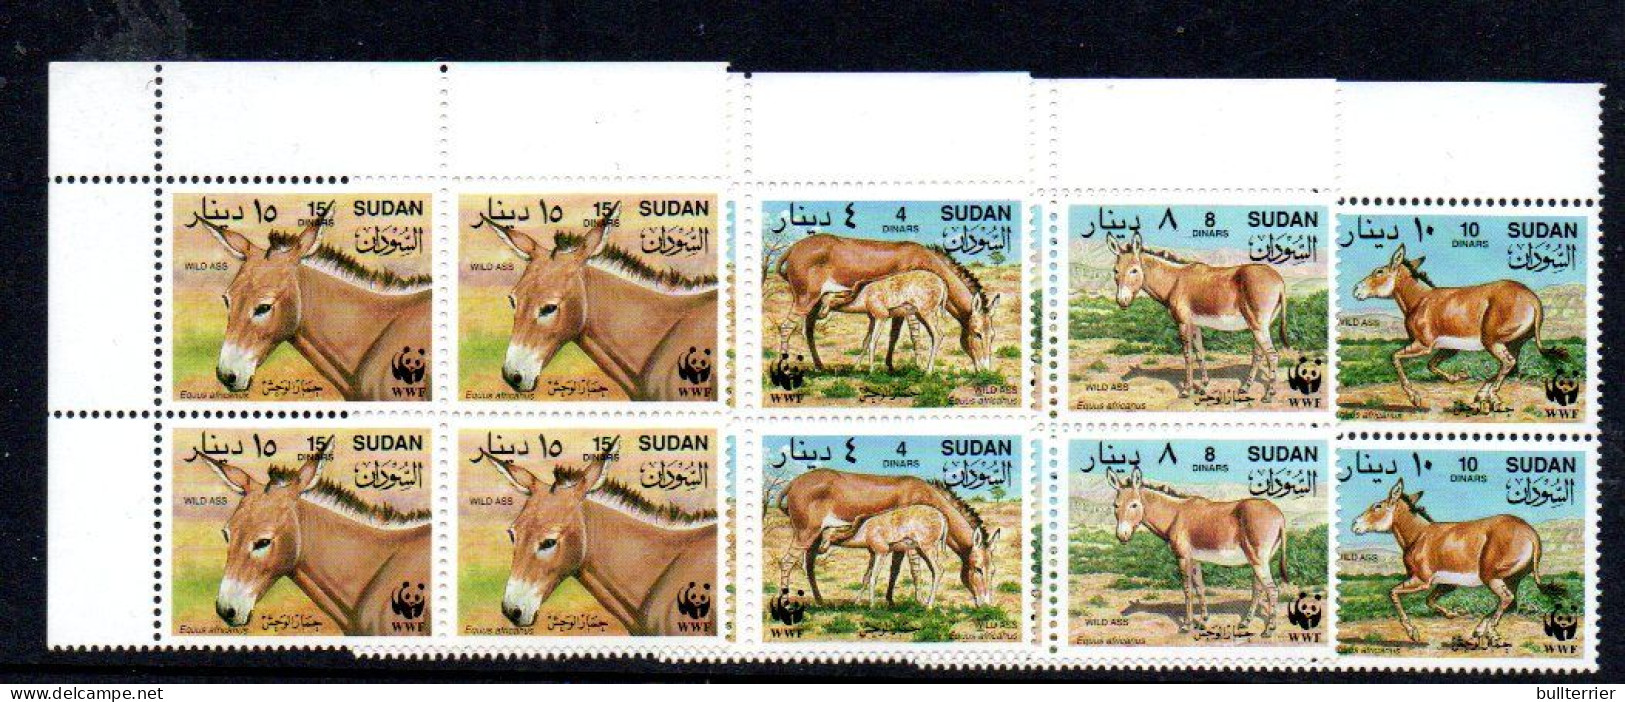 SUDAN - WWF - WILD ASS SET OF 4 IN CORNER BLOCKS OF 4   MINT NEVER HINGED - Soudan (1954-...)